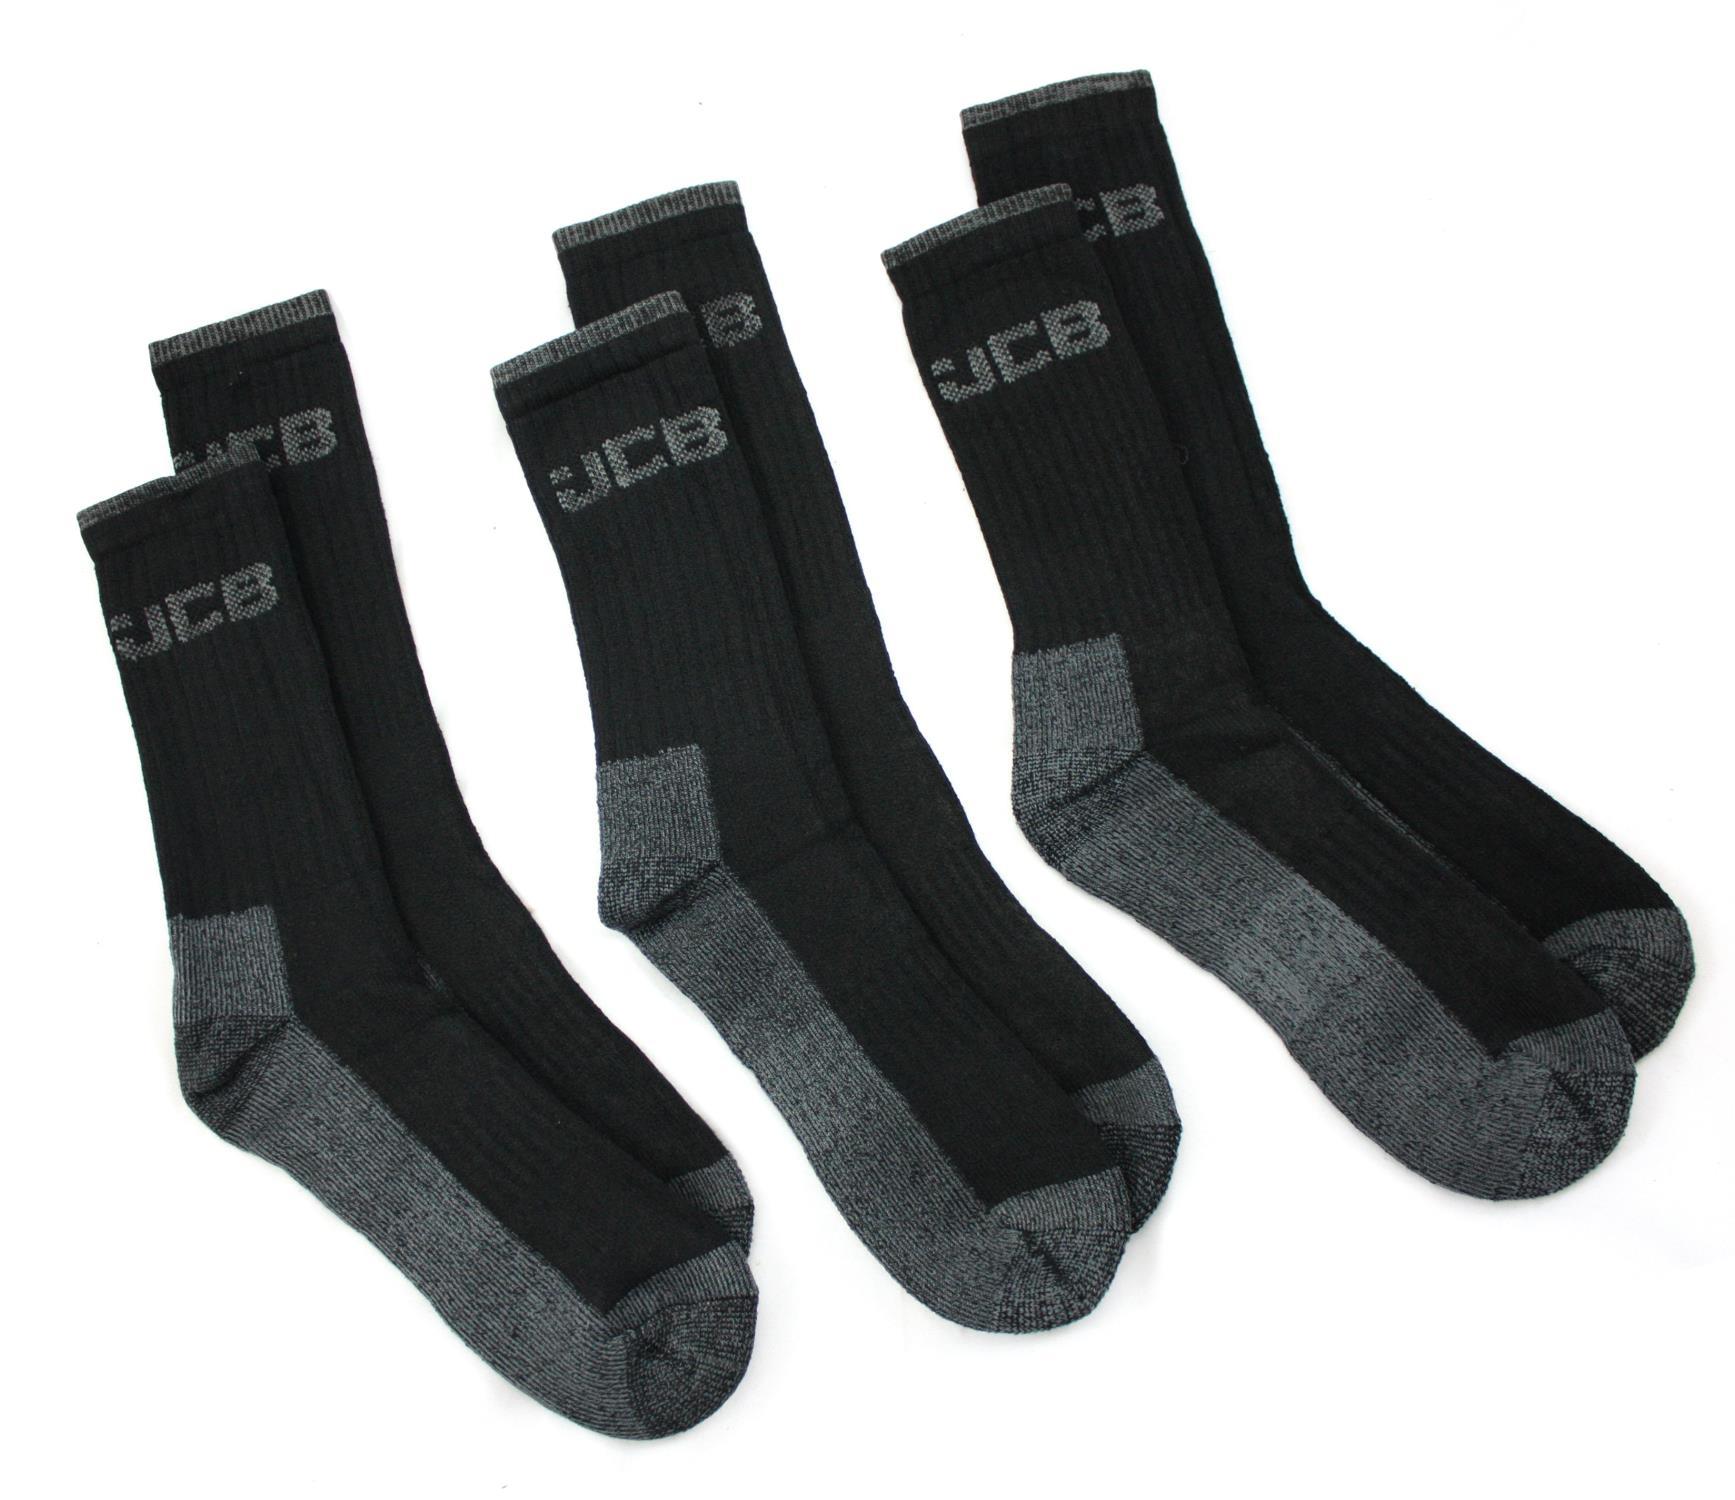 Buy JCB Heavy Duty Black Work Socks Pack of 3 from Fane Valley Stores ...